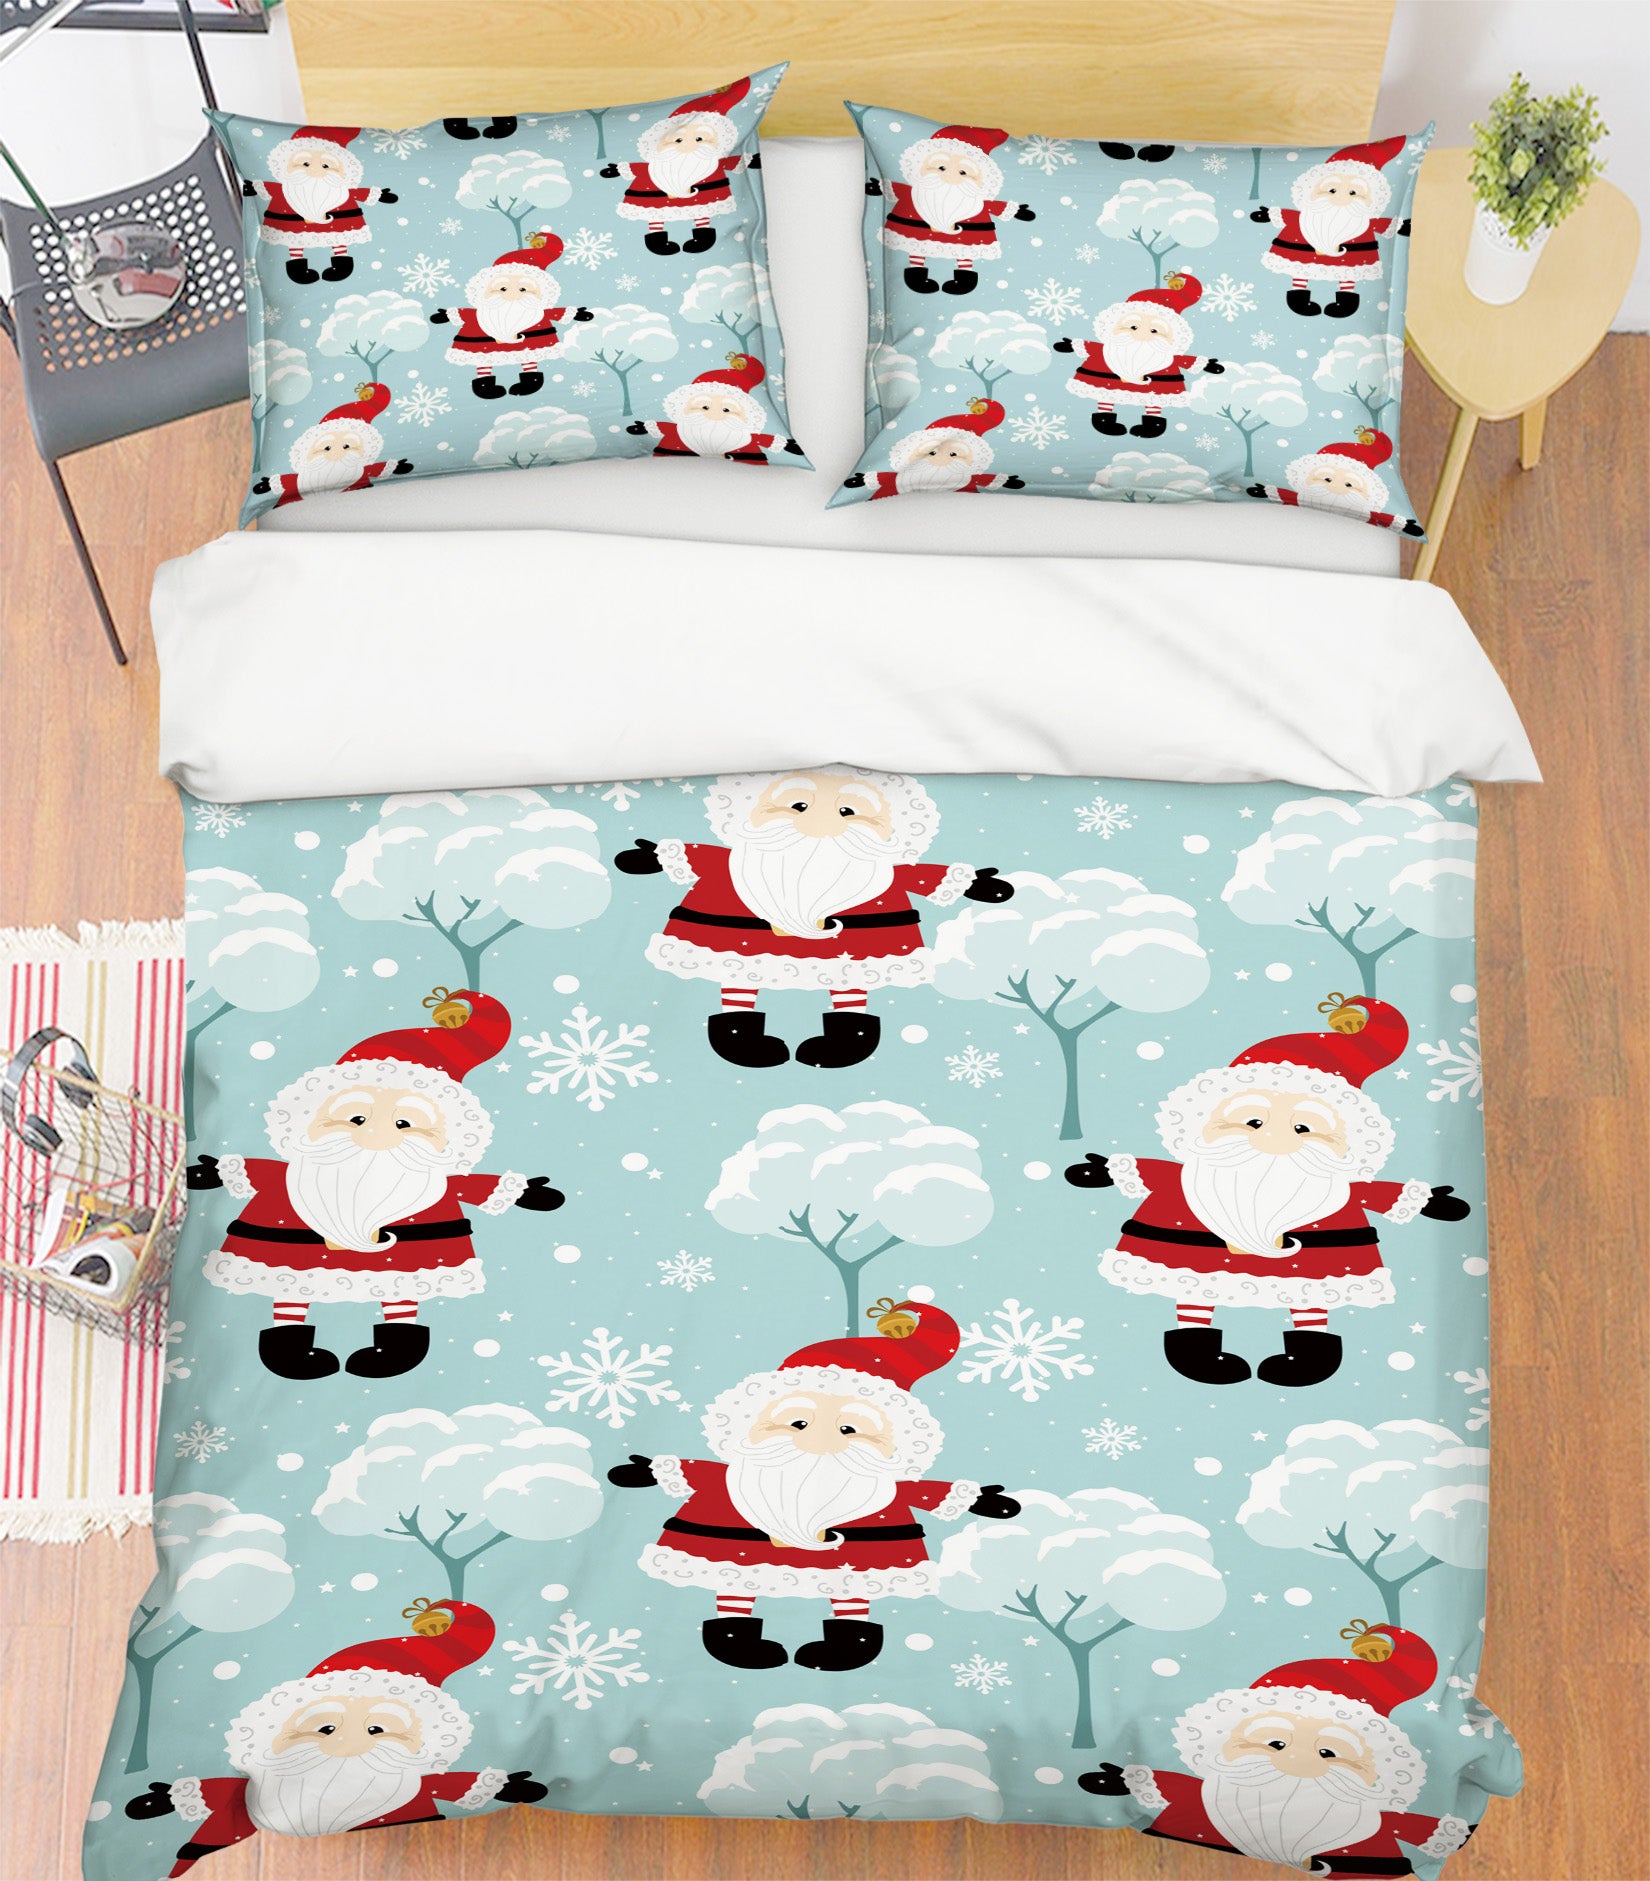 3D Santa Claus 53009 Christmas Quilt Duvet Cover Xmas Bed Pillowcases